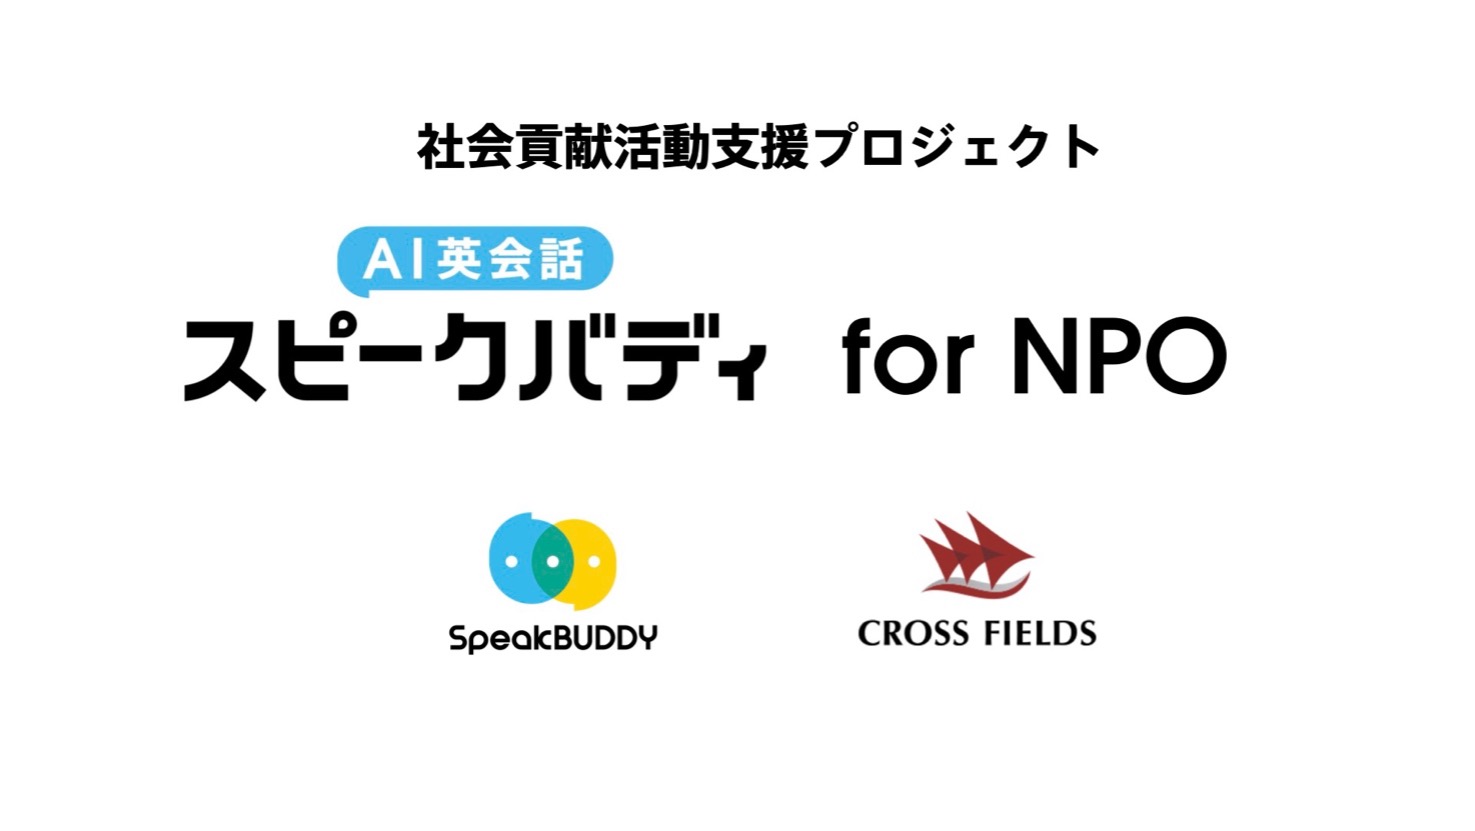 Ai英会話スピークバディ 社会貢献活動を支援するプロジェクト スピークバディfor Npo 開始 株式会社スピークバディのプレスリリース